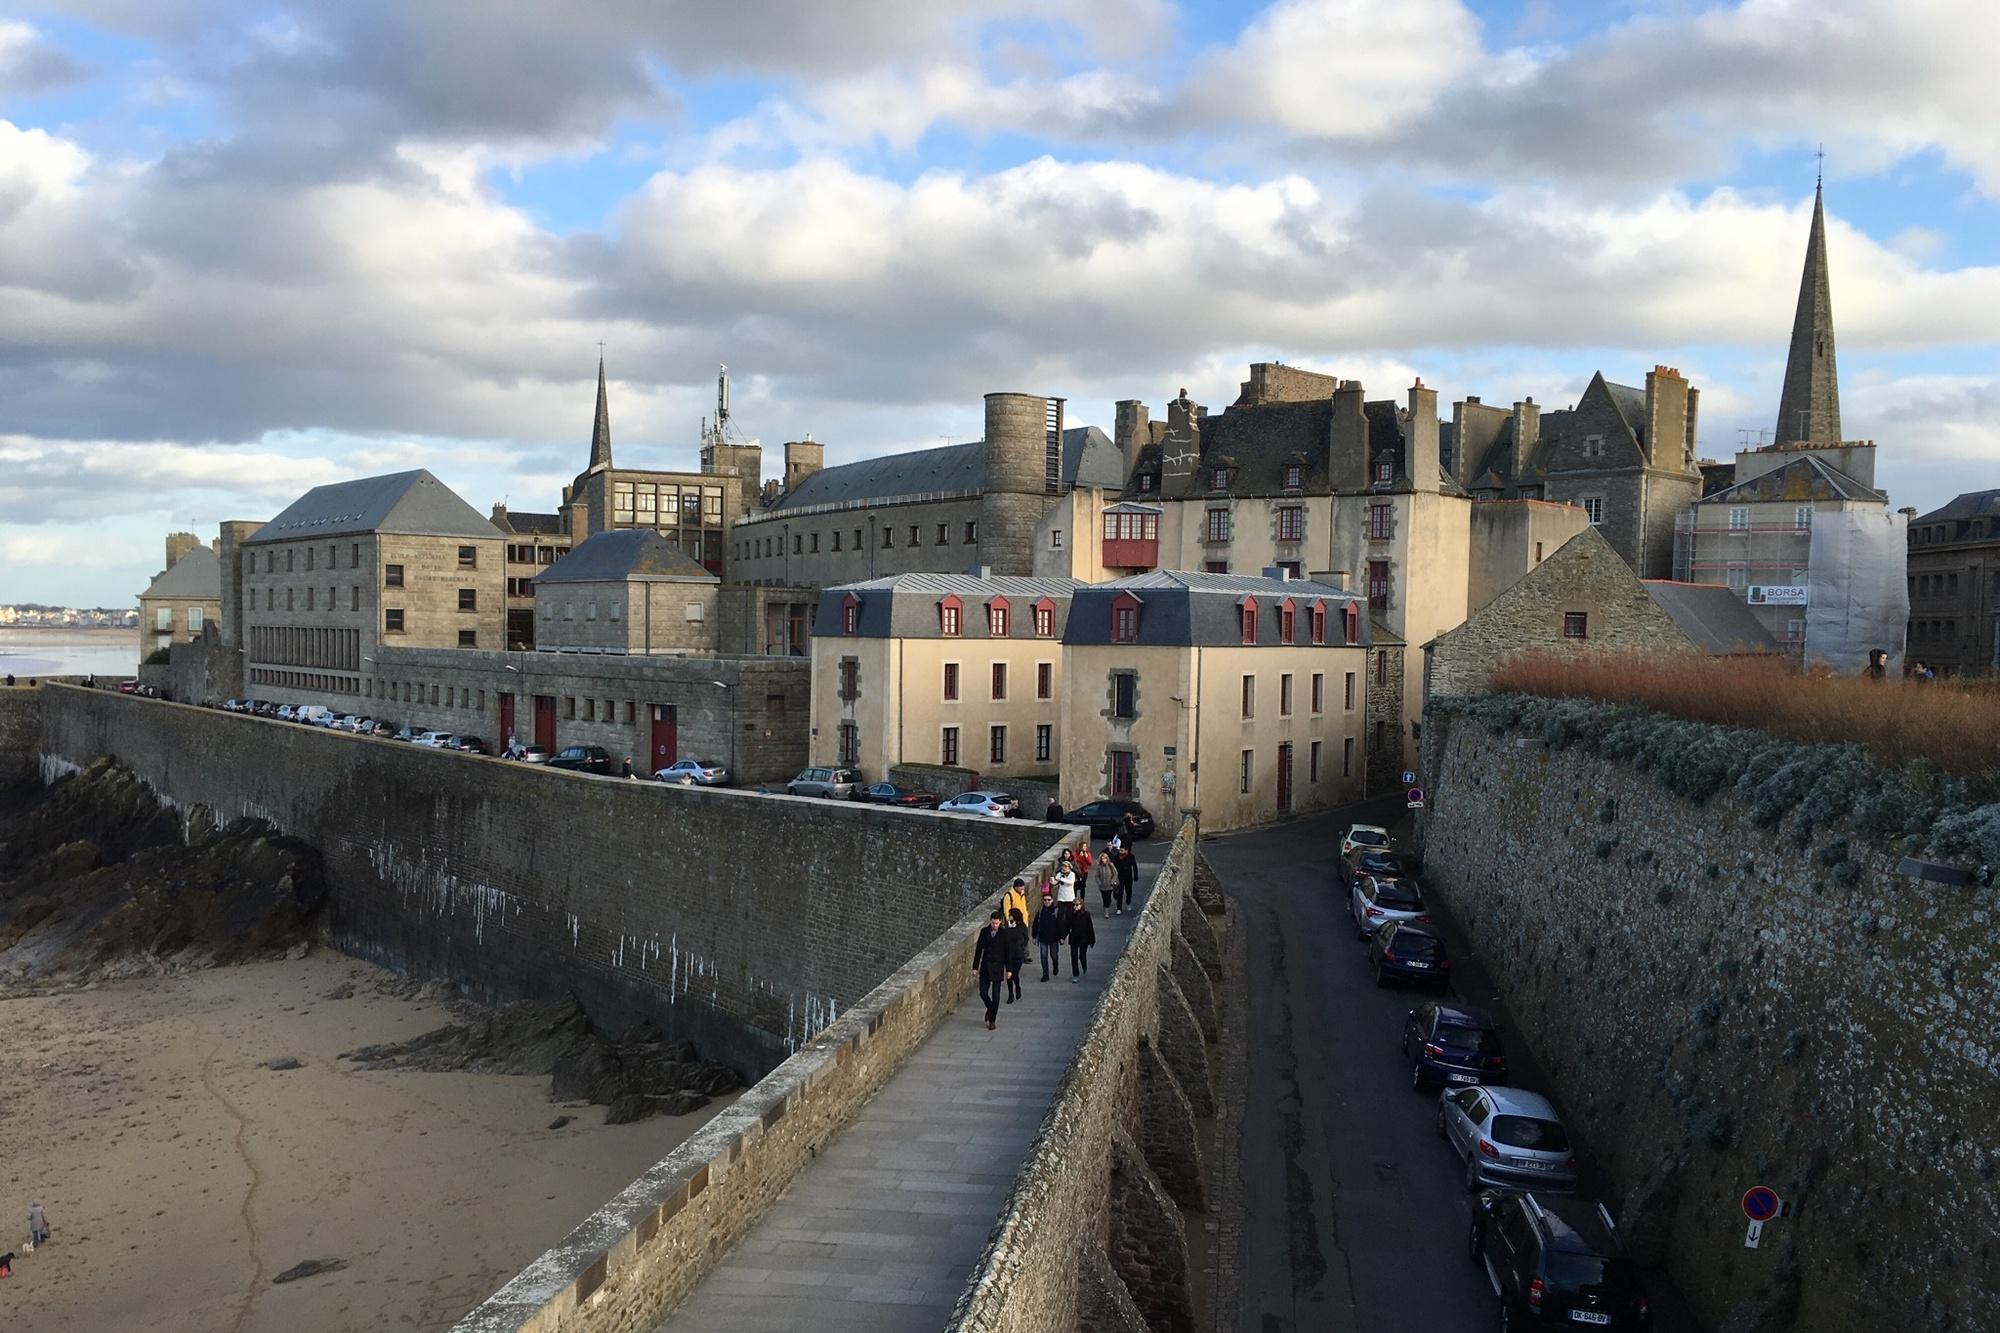 De impressionante omwalling van Saint-Malo.